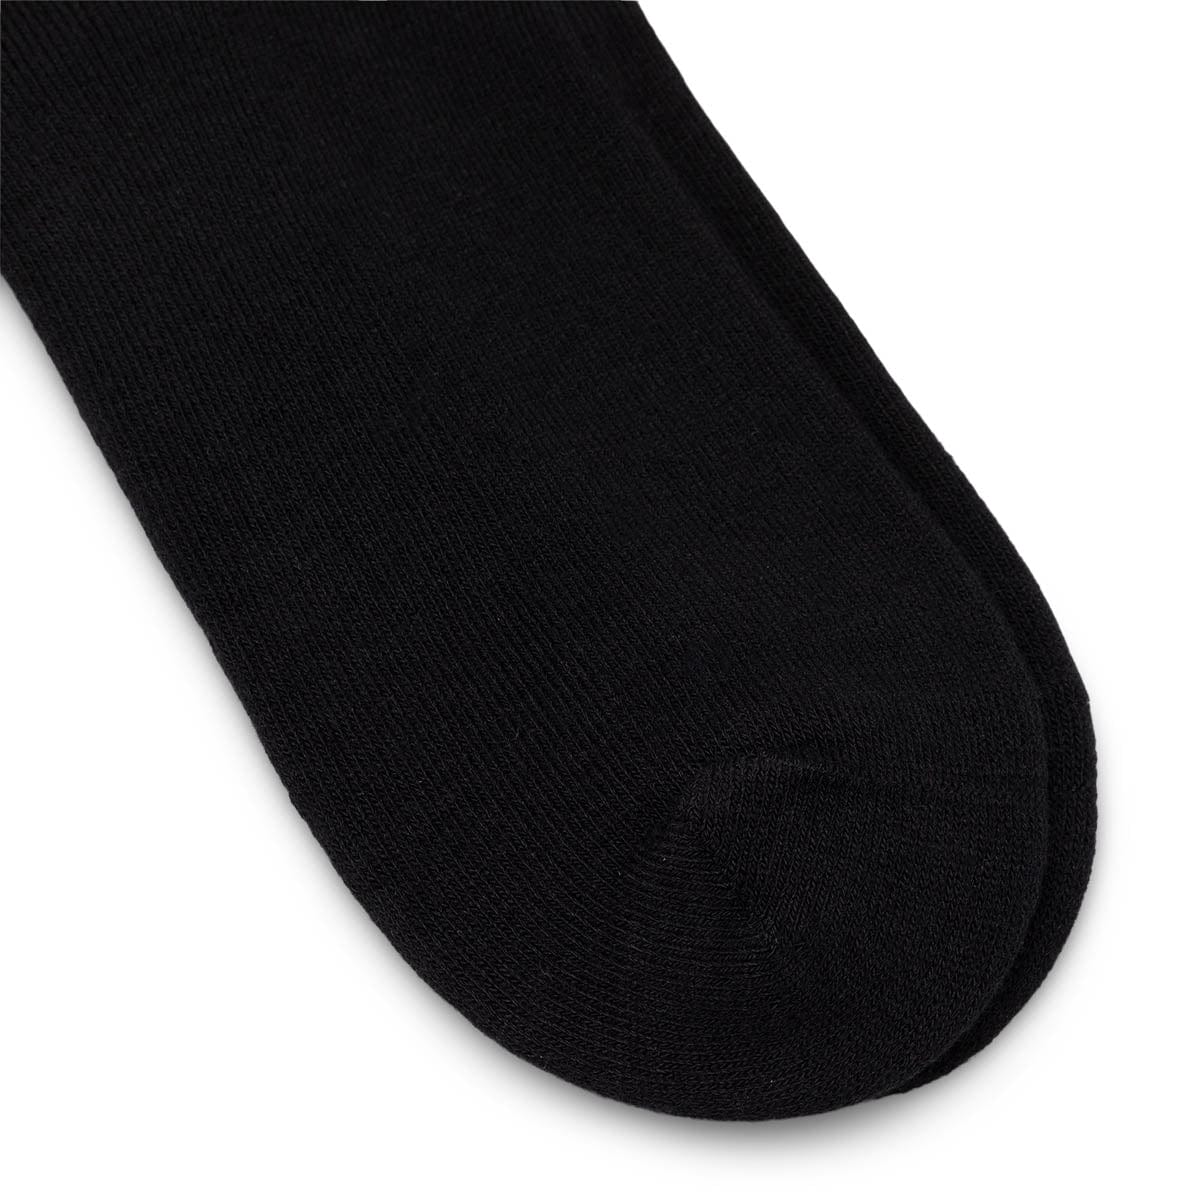 Carhartt WIP Socks BLACK/GOLD / O/S CHASE SOCKS